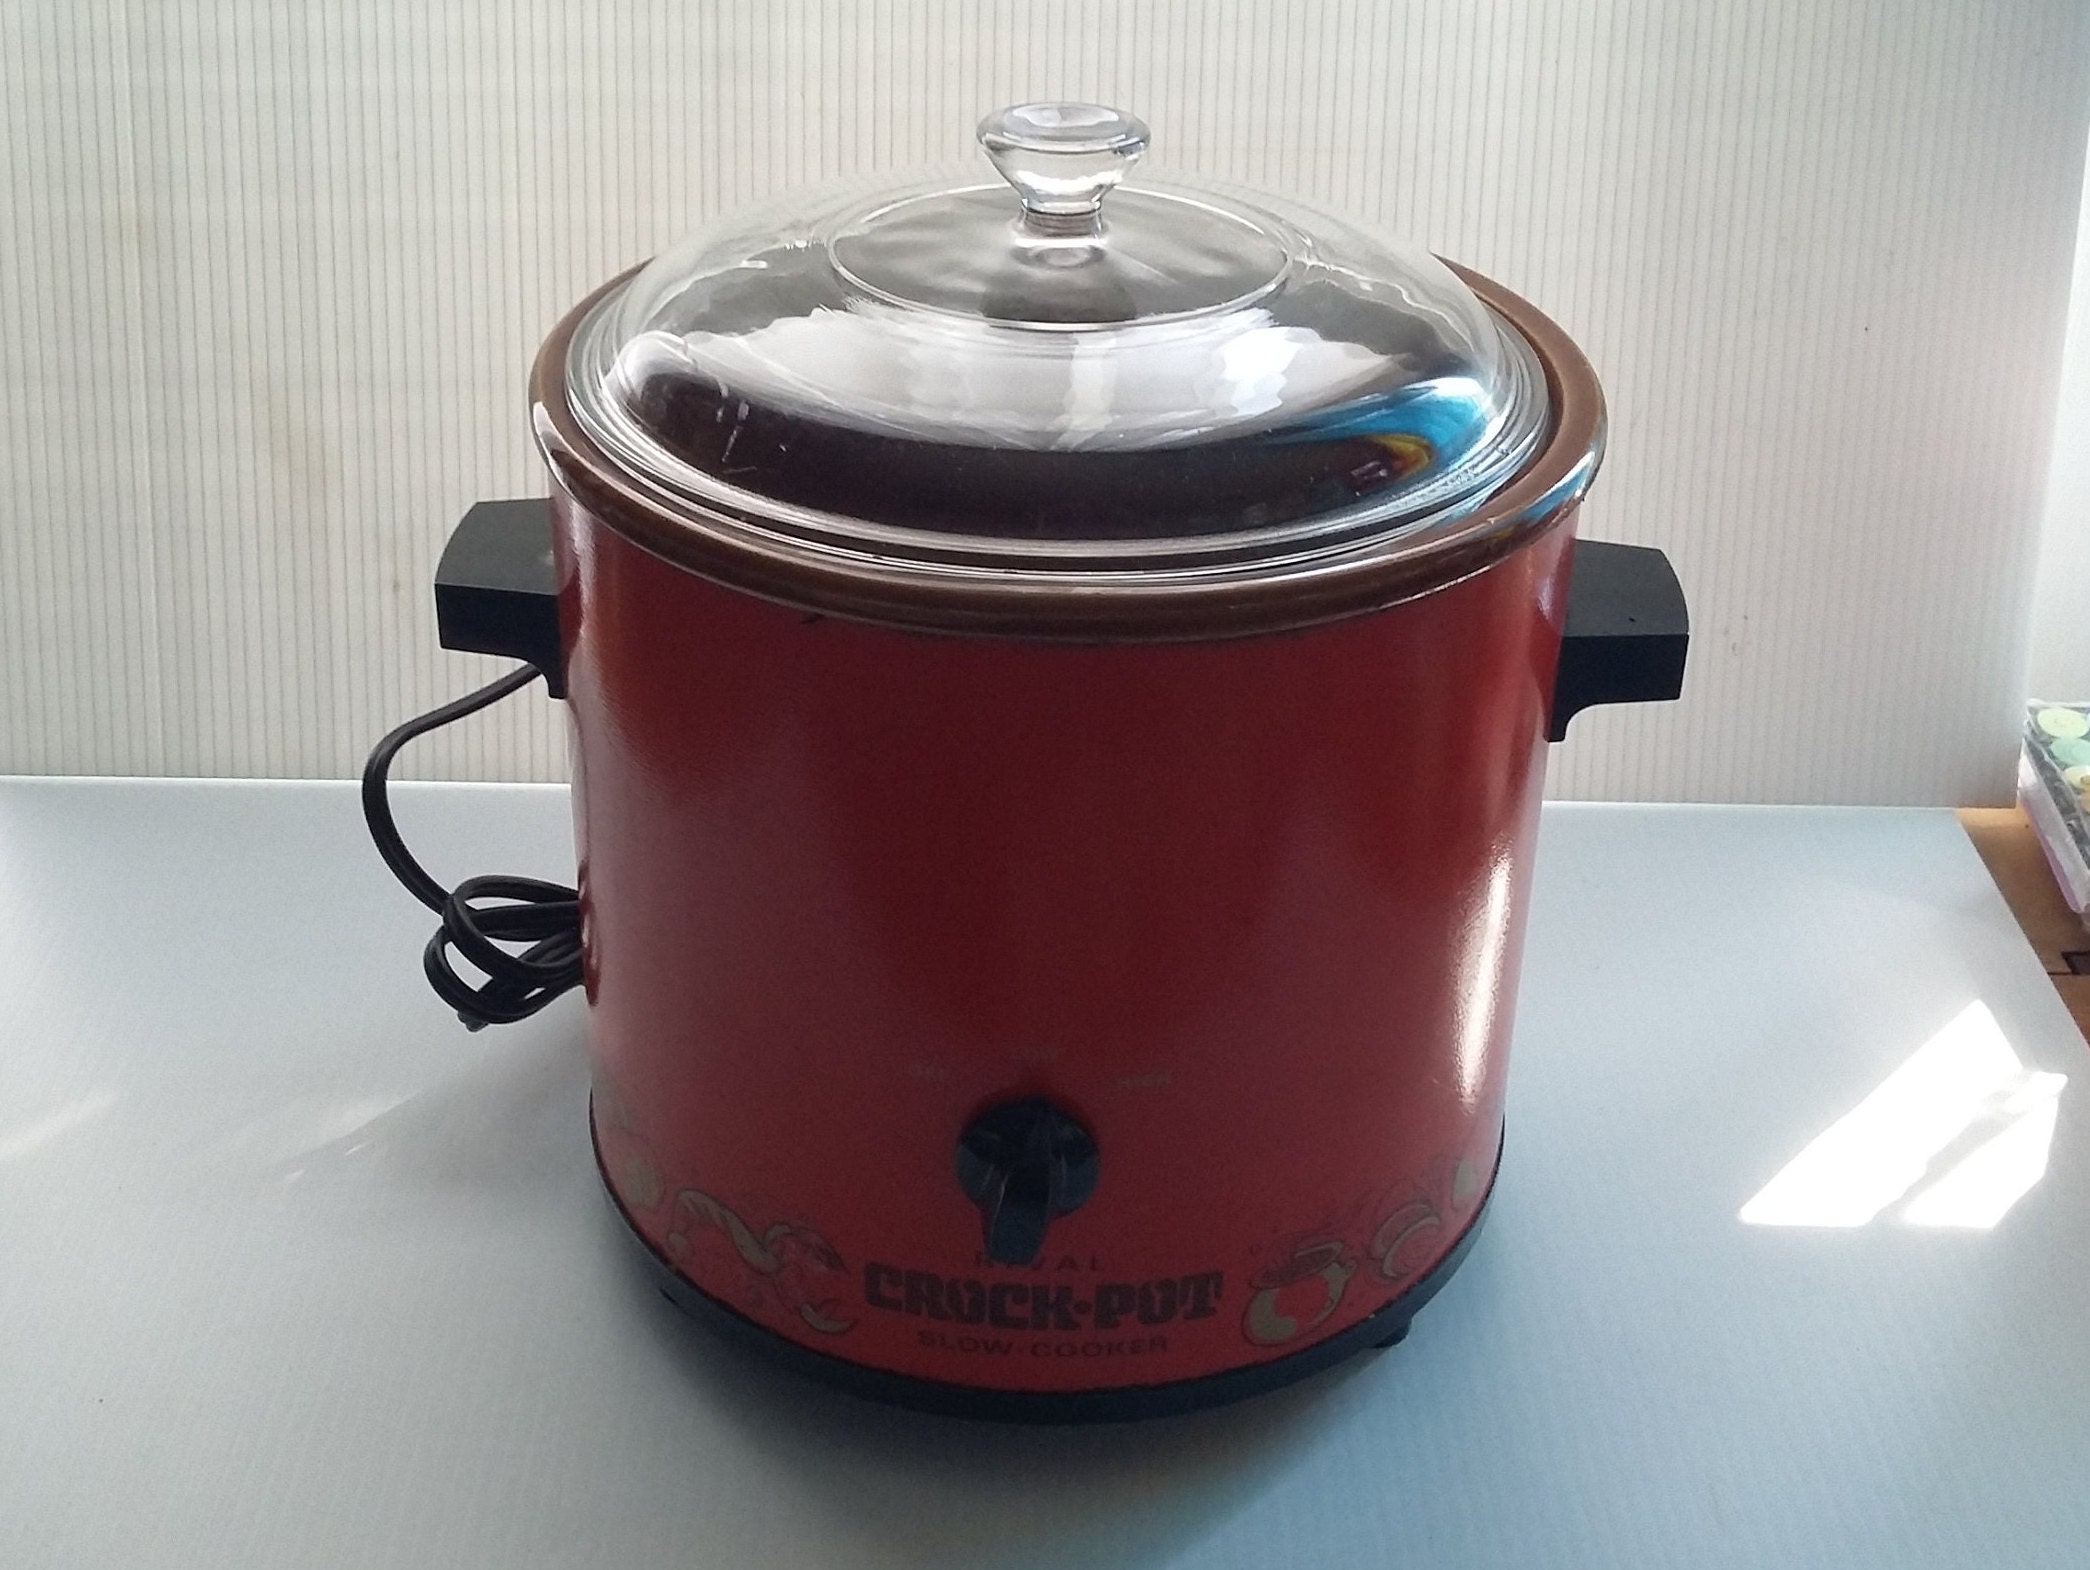 Working, Vintage Rival Slow Cooker Crock Pot With Herb Design, Stoneware  3.5 Qt 3150 Removable Crock With Original Plastic Lid 